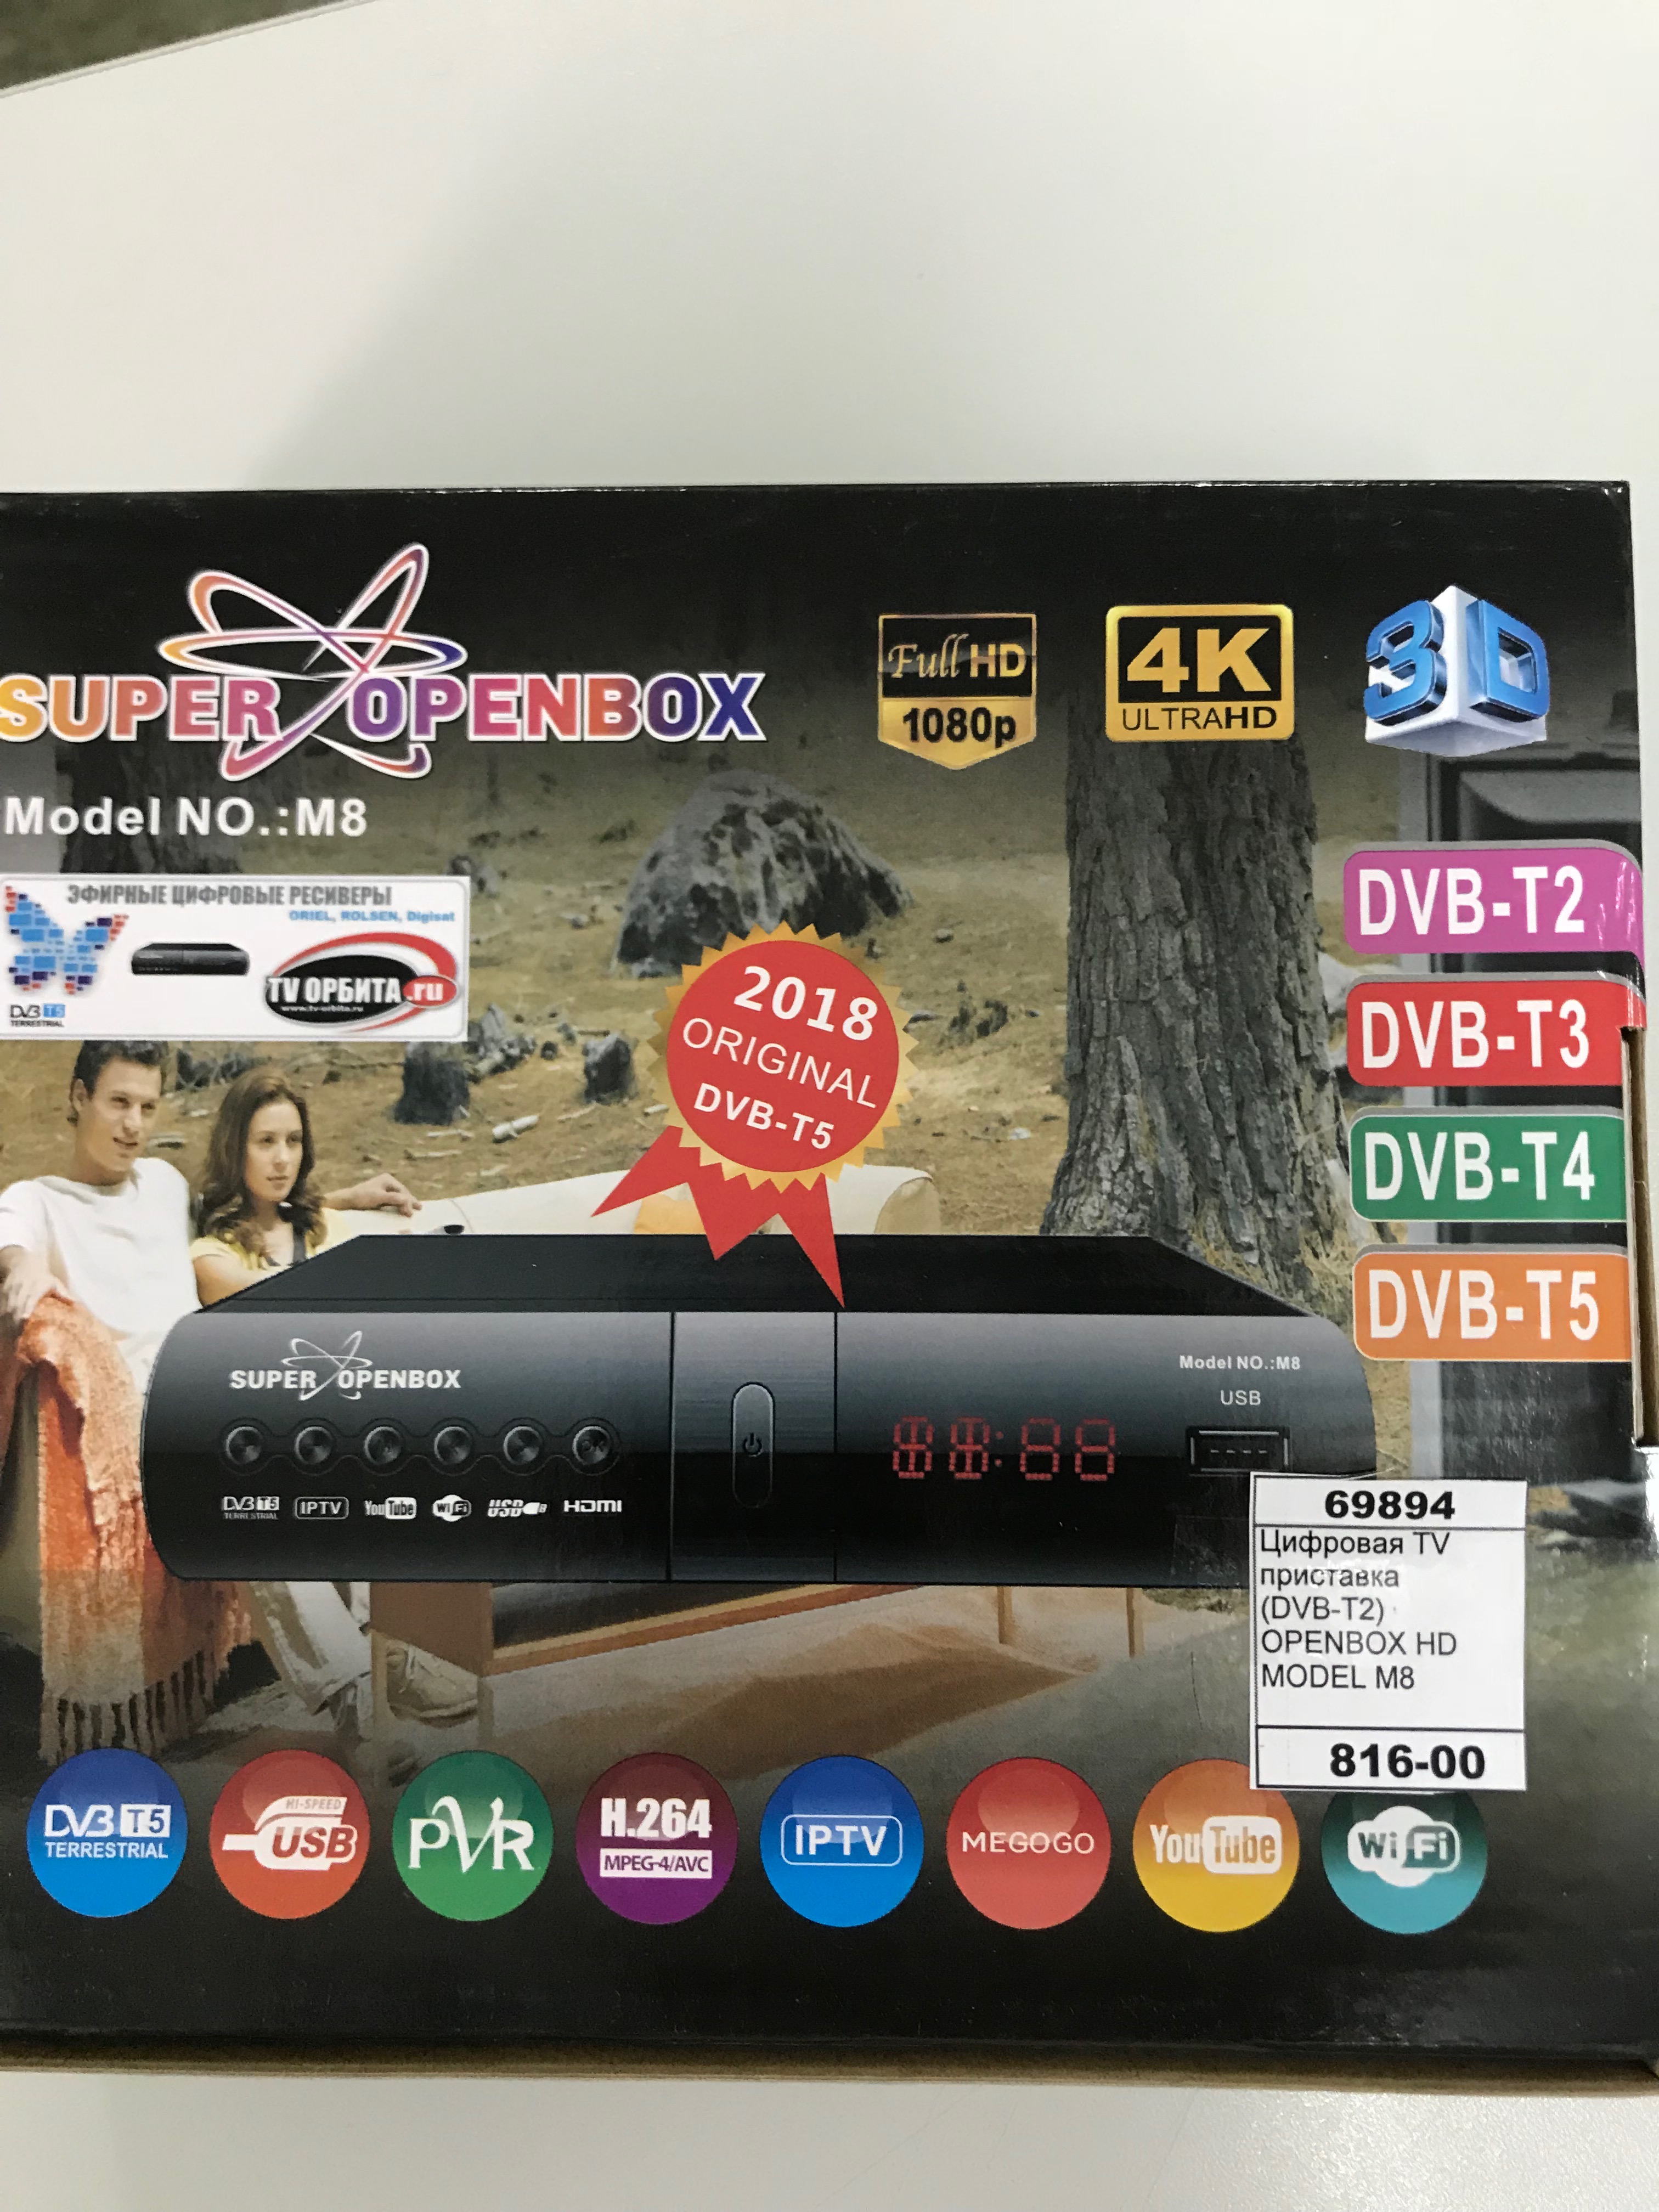 Цифровая TV приставка (DVB-T2) OPENBOX HD MODEL M8